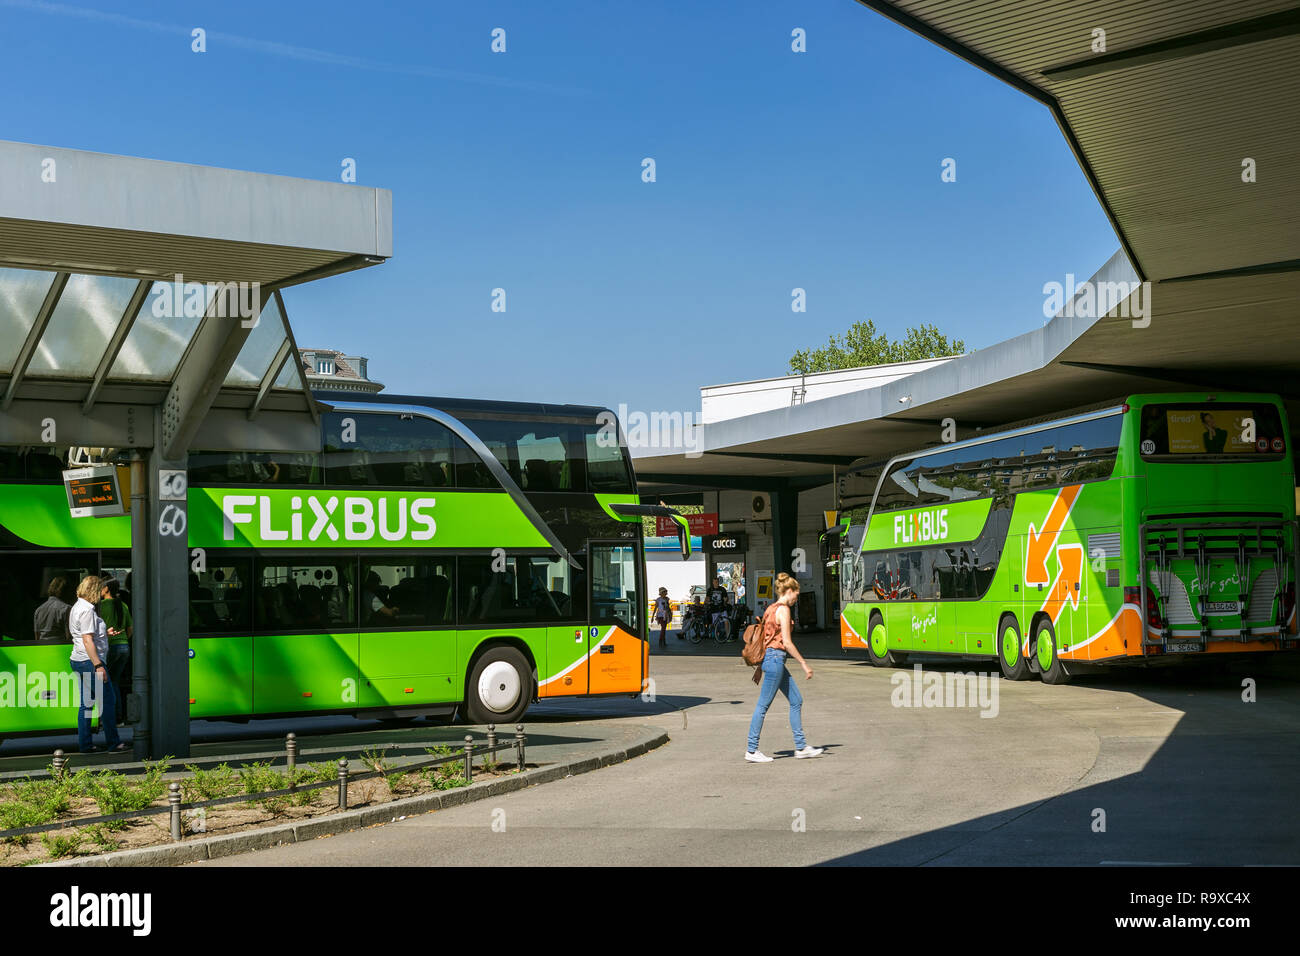 08.05.2018, Berlin, Deutschland - Busse des Fernbusunternehmens Flixbus am Zentralen Omnibusbahnhof Berlin. 0MC180508D423CARO [MODEL RELEASE: NO, PROP Stock Photo